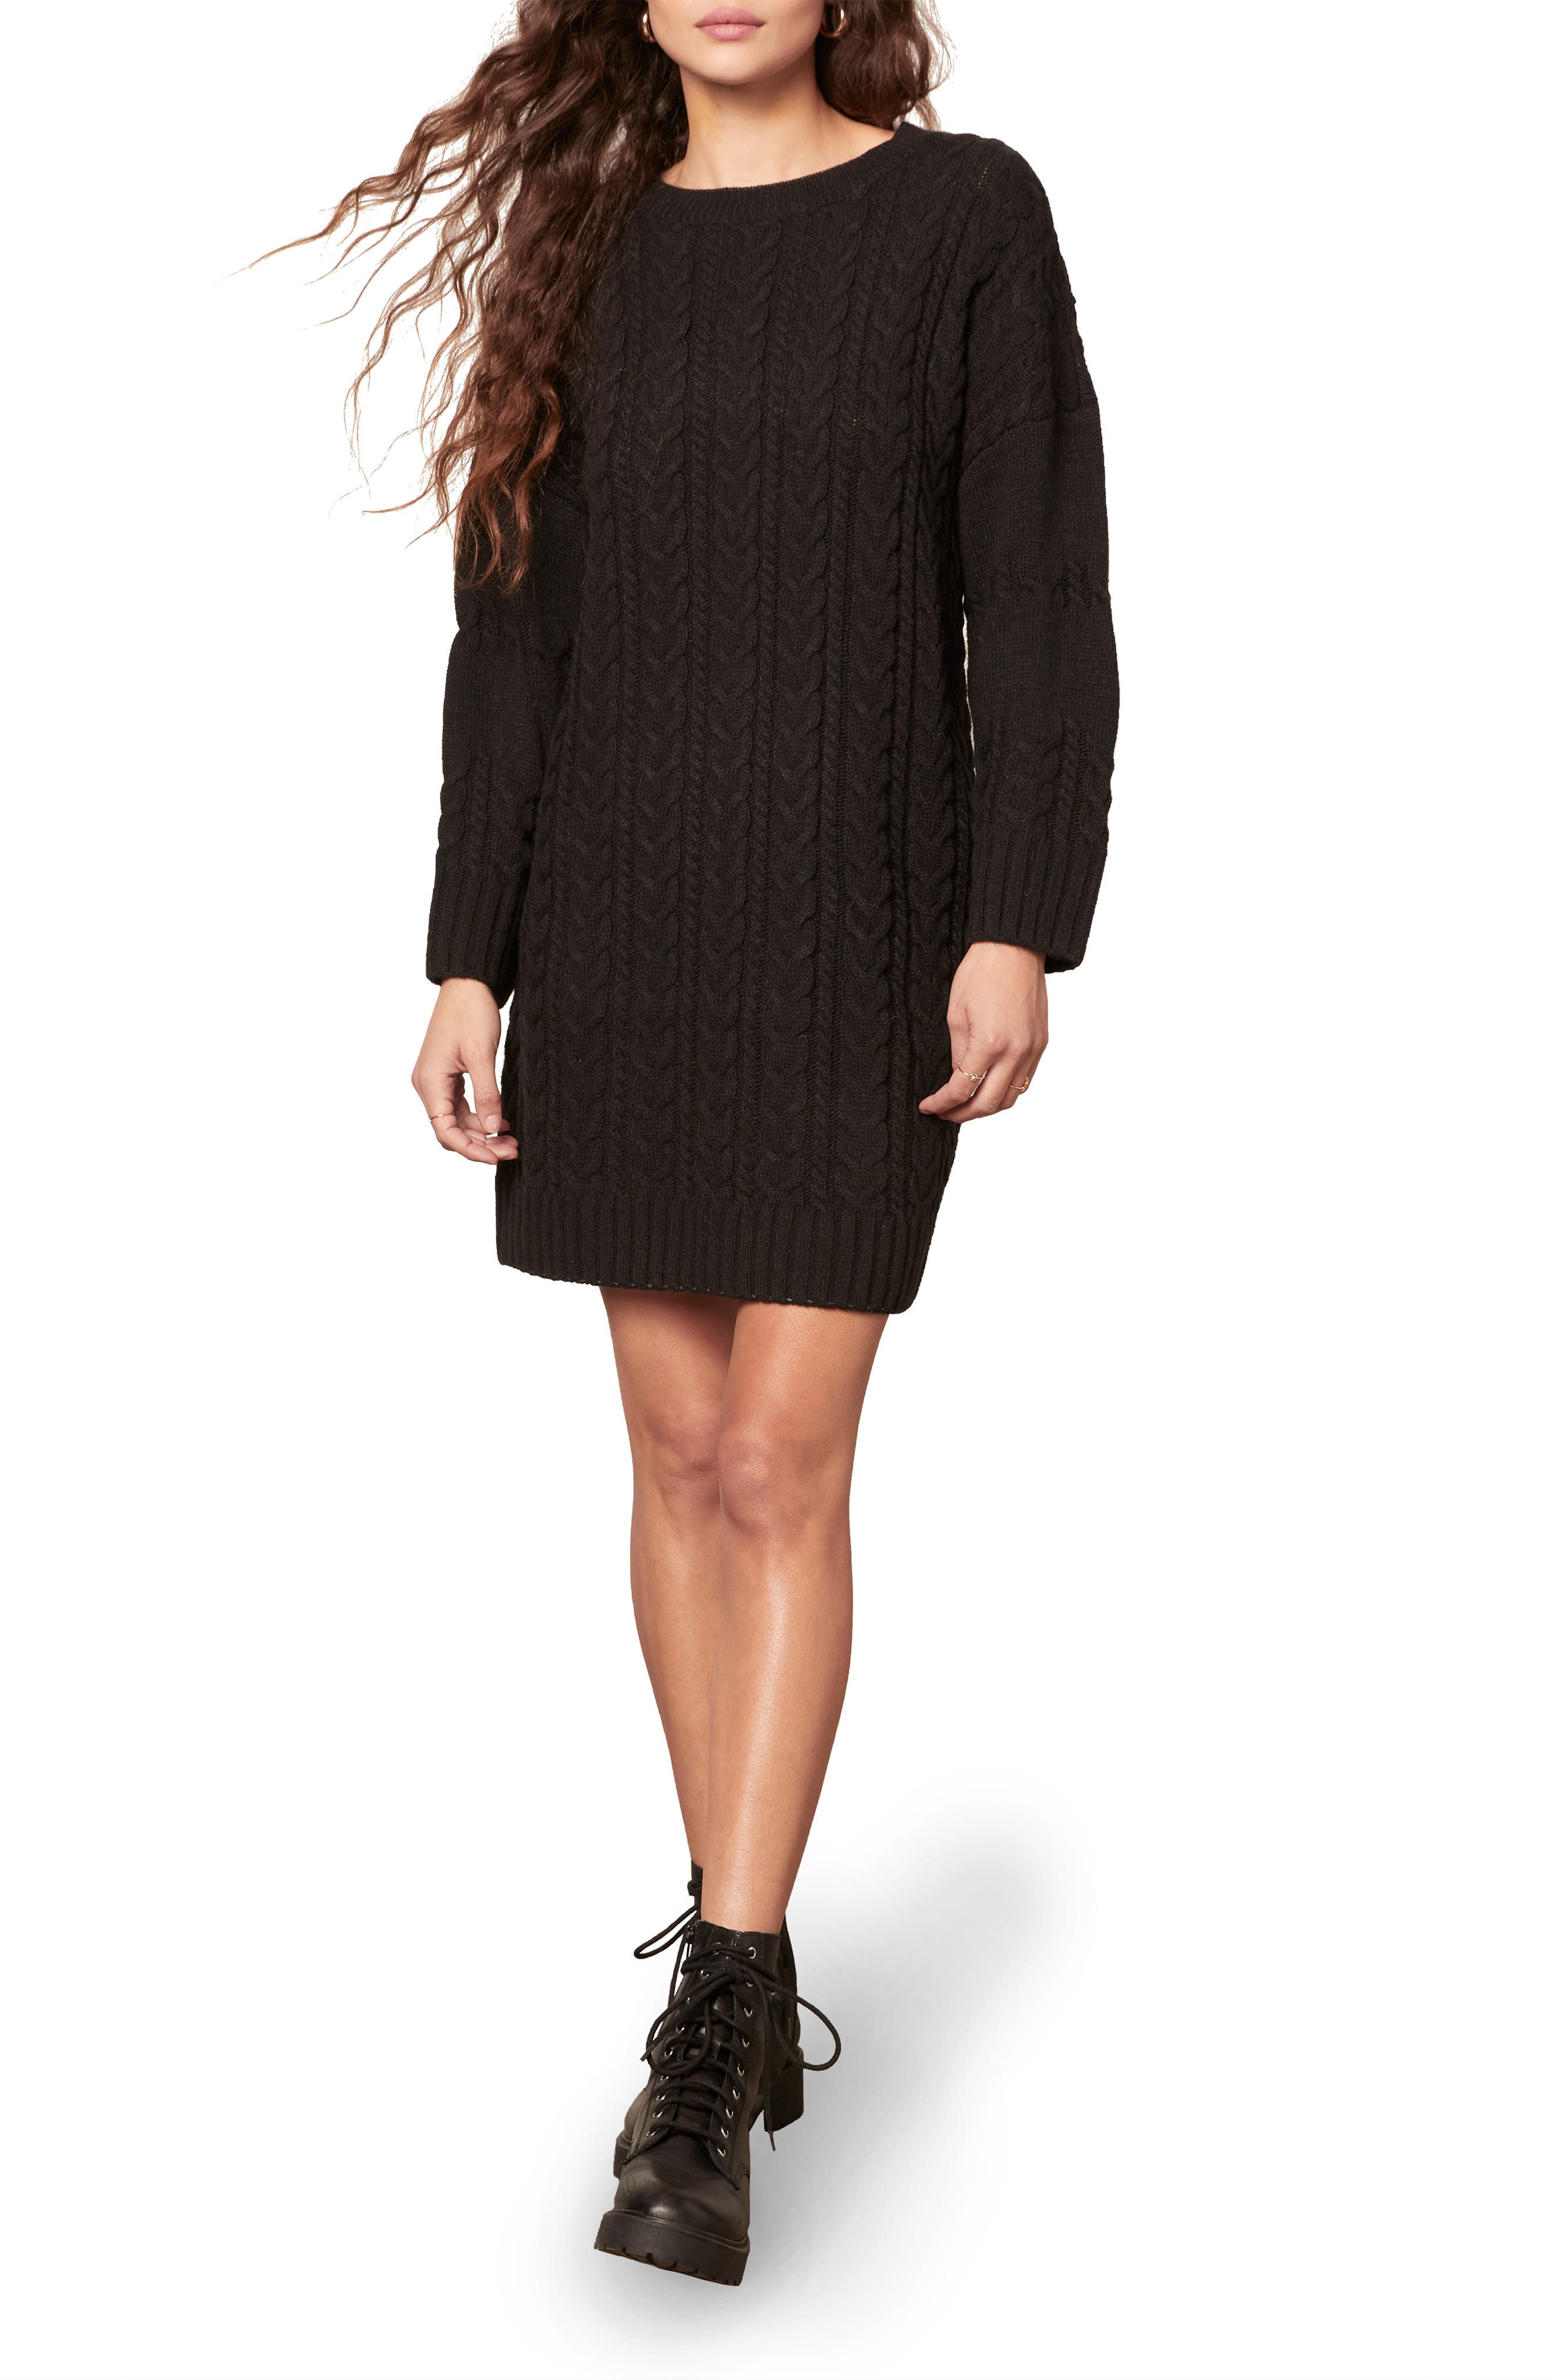 Buy > sweater dress short sleeve > in stock